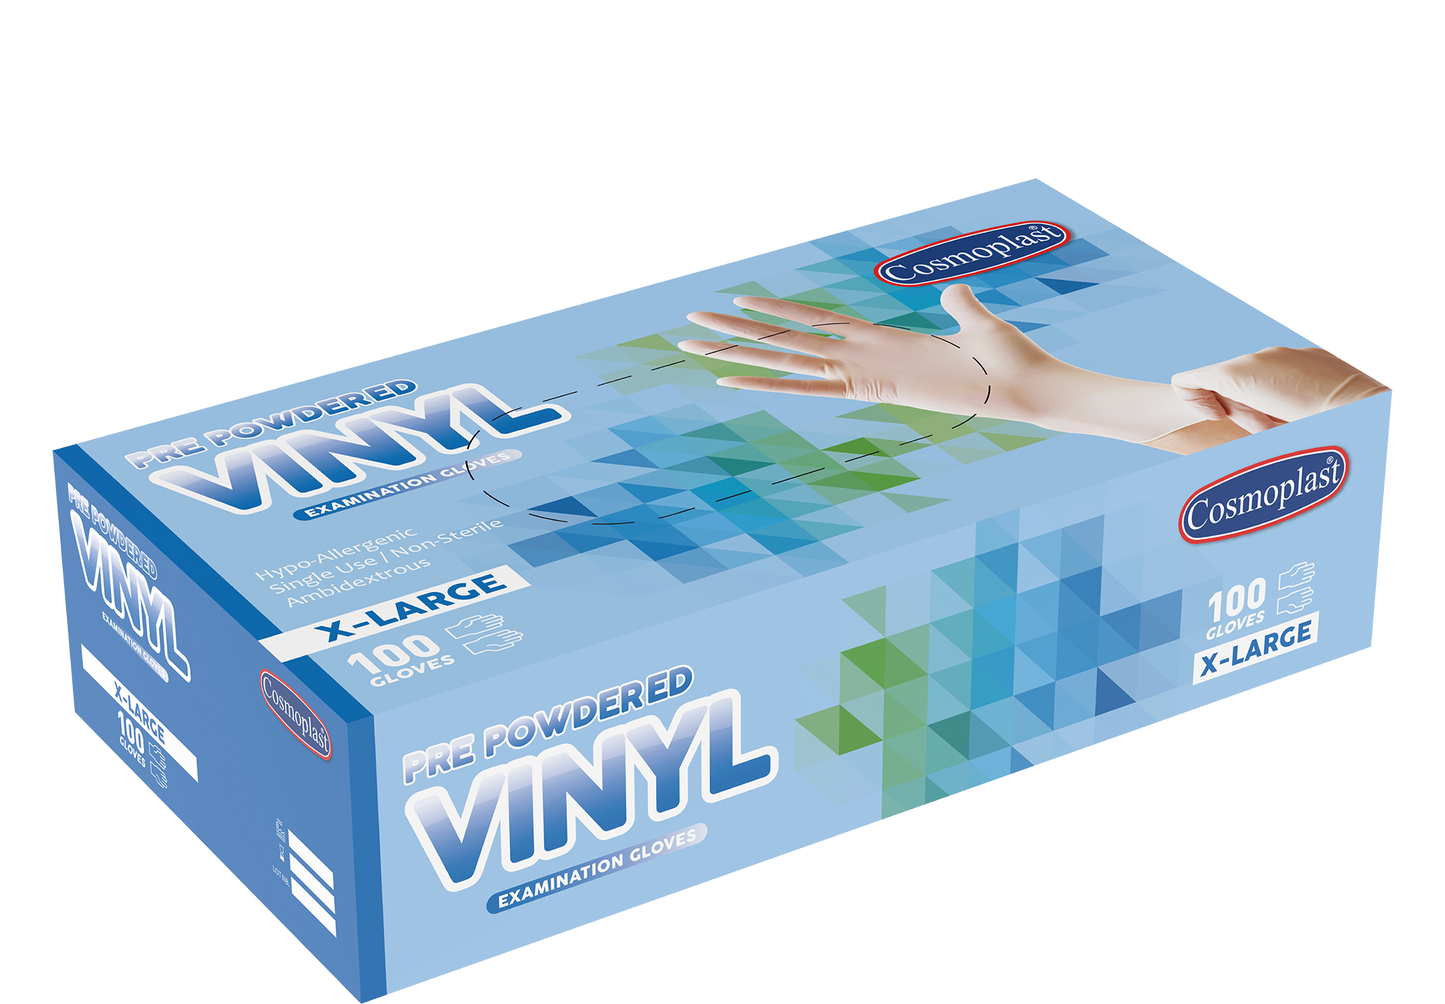 Cosmoplast Hygiene Clear Pre-powdered Vinyl Gloves XLarge 10 Packs x 100 Pcs